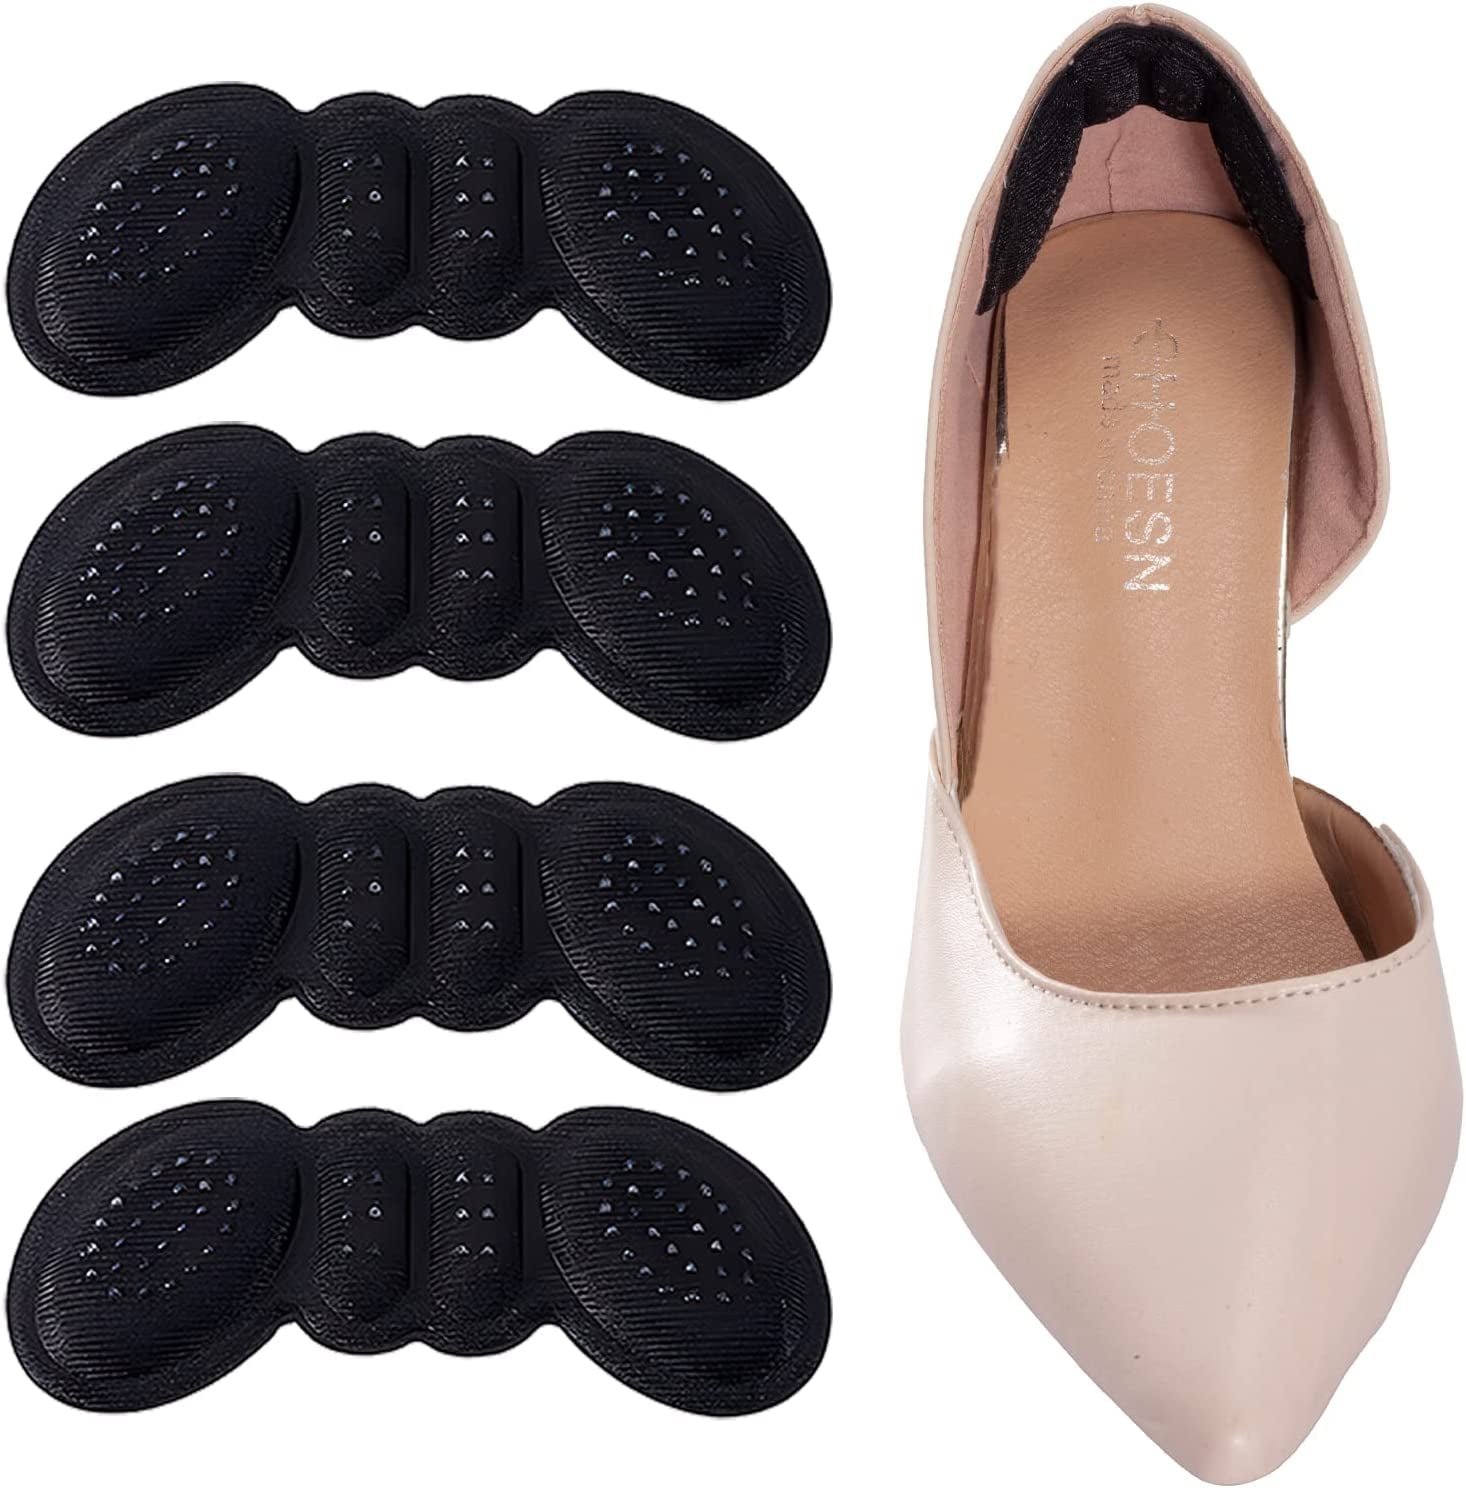 Heel Pads Shoes That Too Big Inserts Women Anti Slip Grips Liner Cushions Men Shoe Prevent Rubbing Blisters Slipping 4Pairs 87b72967 ad57 41c1 9ddb 625f426e4a7d.654c0b7bd54d14dc5f9caa6a96c87616